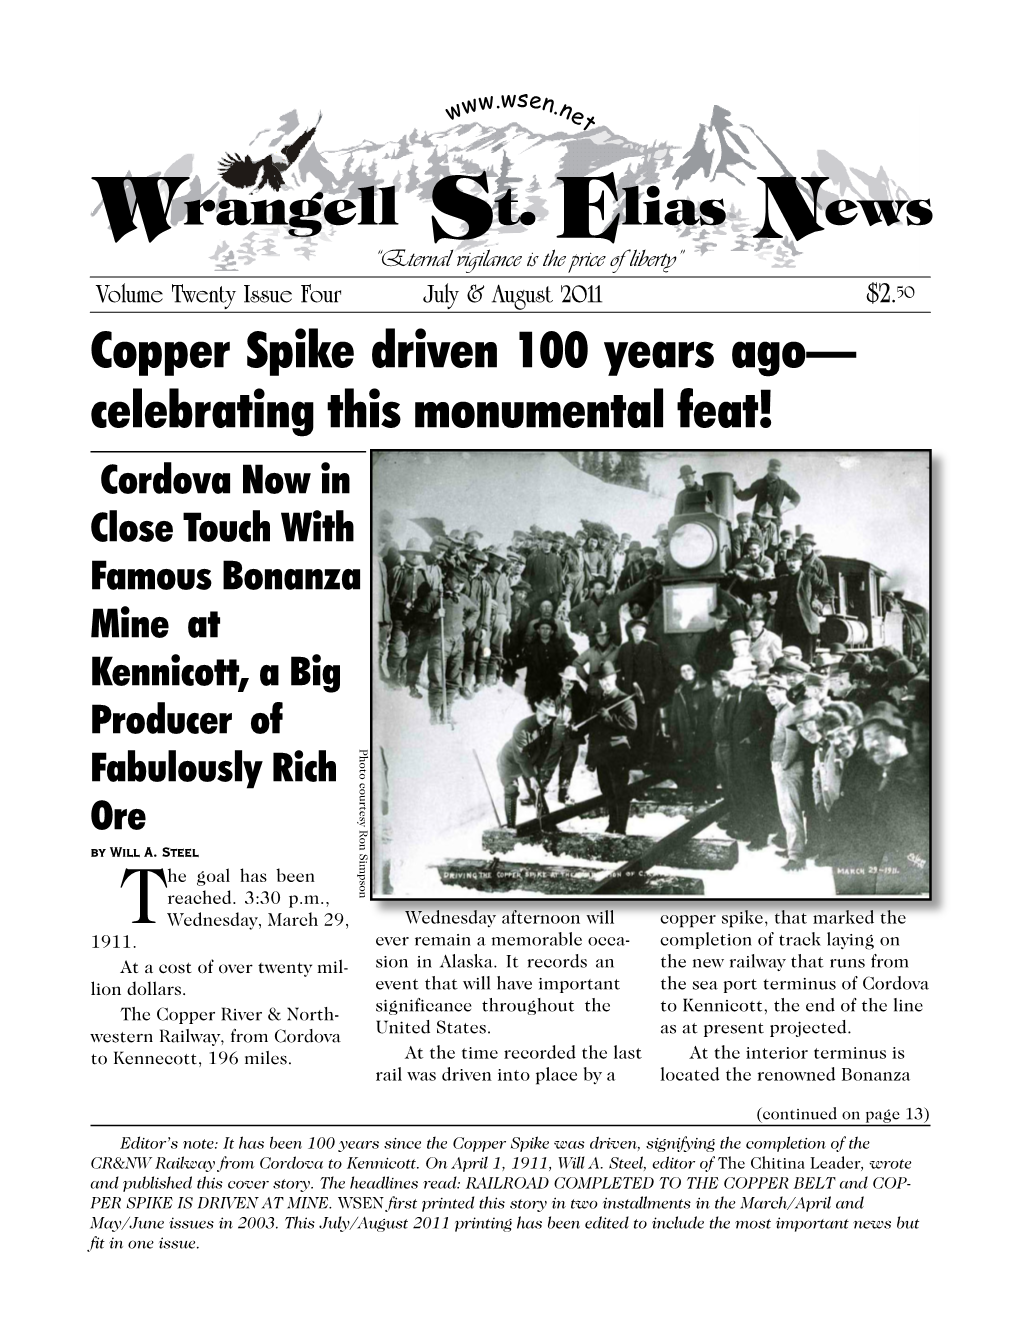 WRANGELL ST. ELIAS NEWS JULY & AUGUST 2011 PAGE 1 Ww.Wsen.N W Et Wrangell St